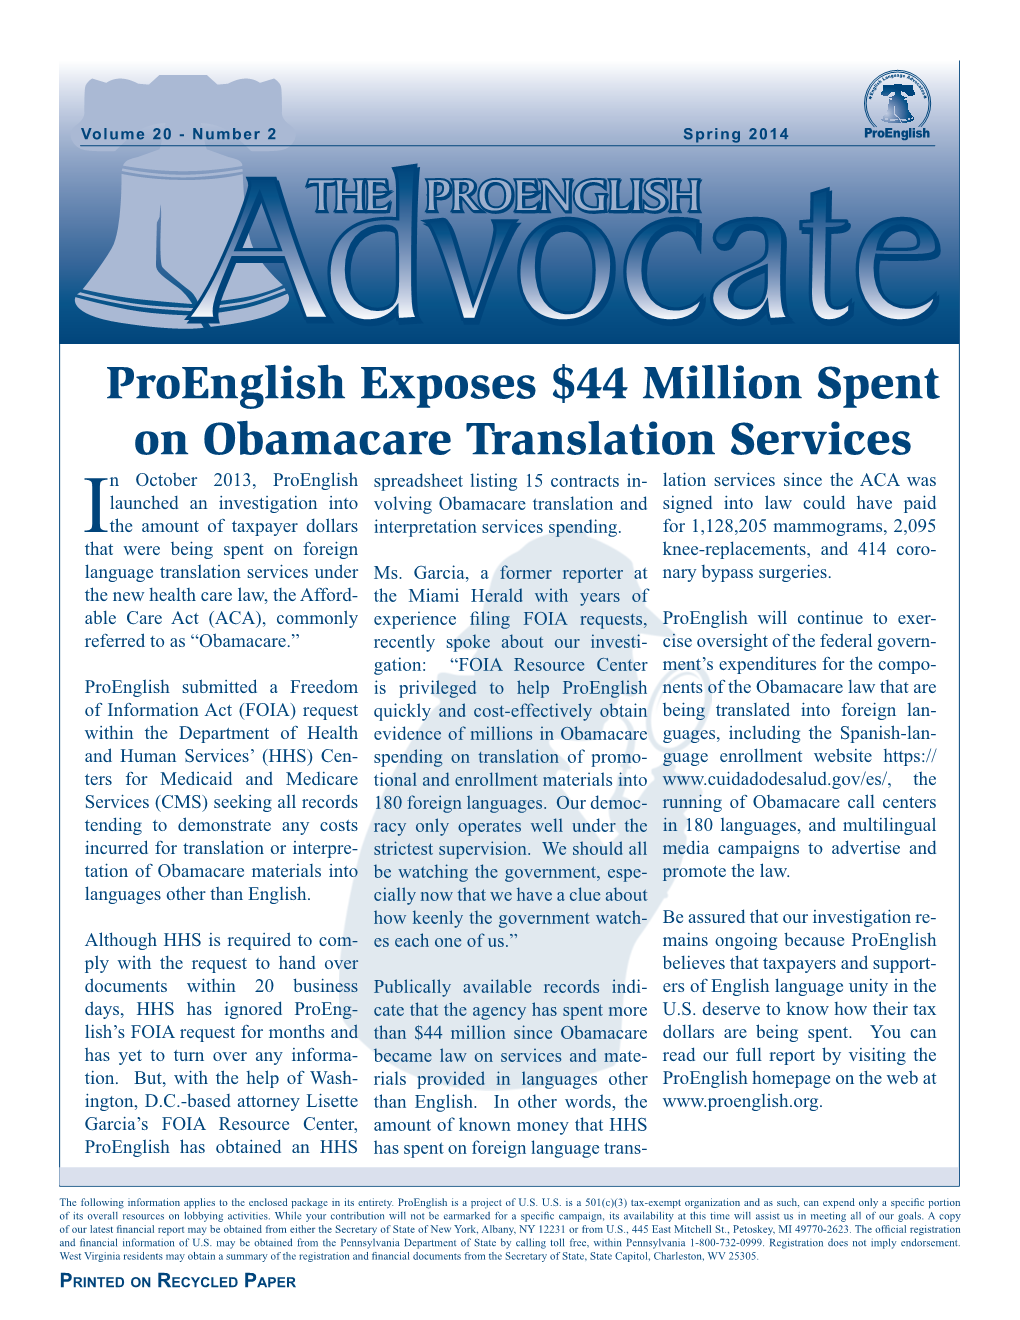 Proenglish Exposes $44 Million Spent on Obamacare Translation Services